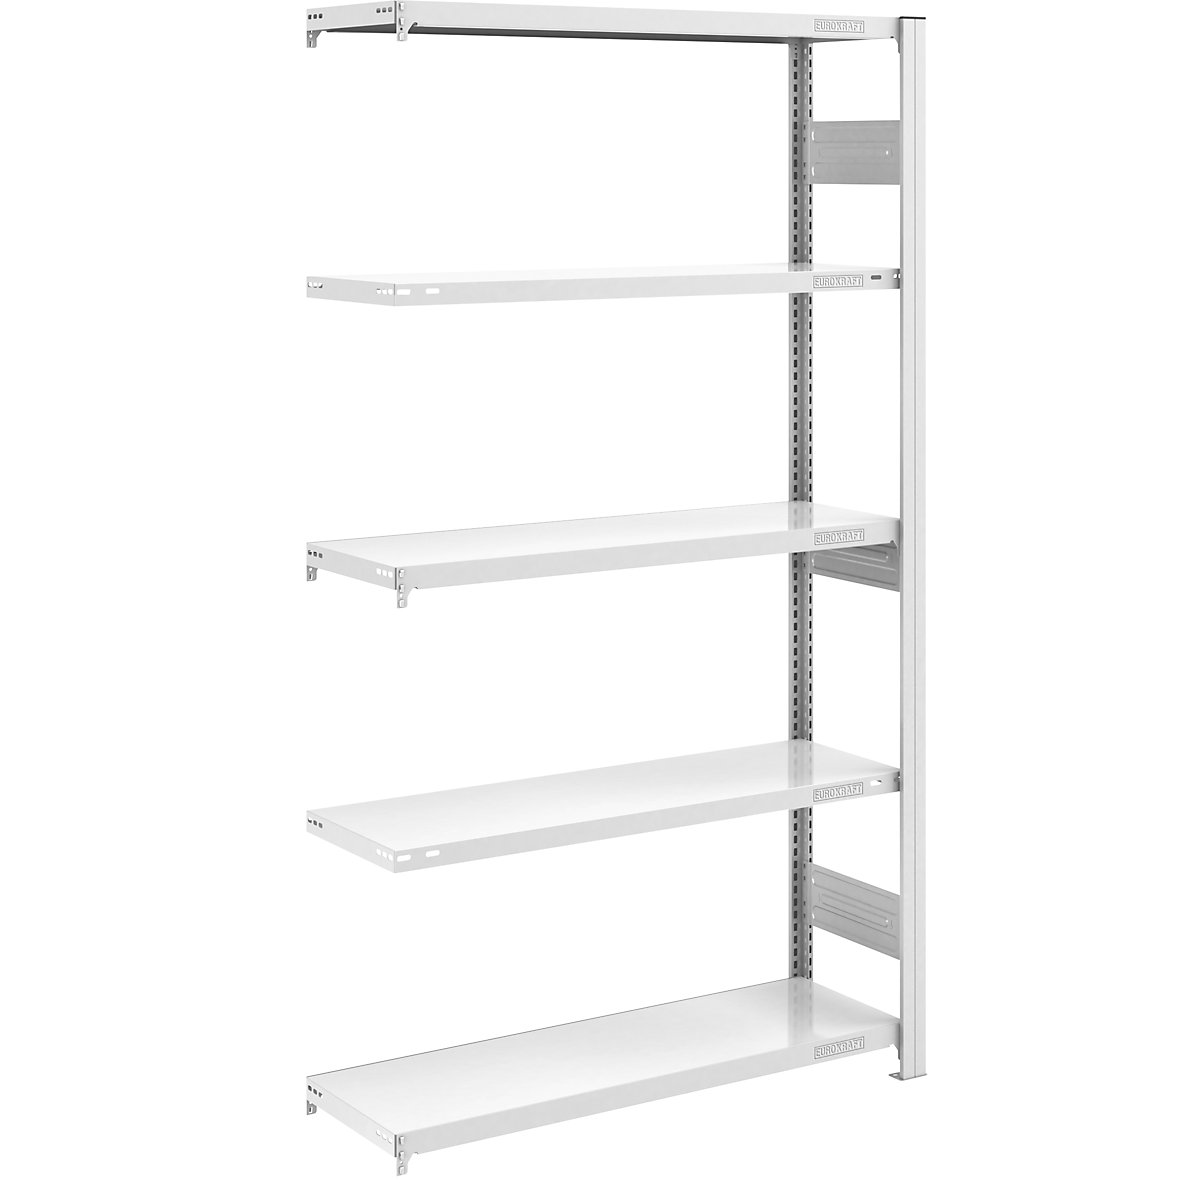 Heavy duty boltless shelving unit, grey, double sided – hofe, shelf unit height 2000 mm, 5 shelves, extension shelf unit, WxD 1000 x 400 mm-20